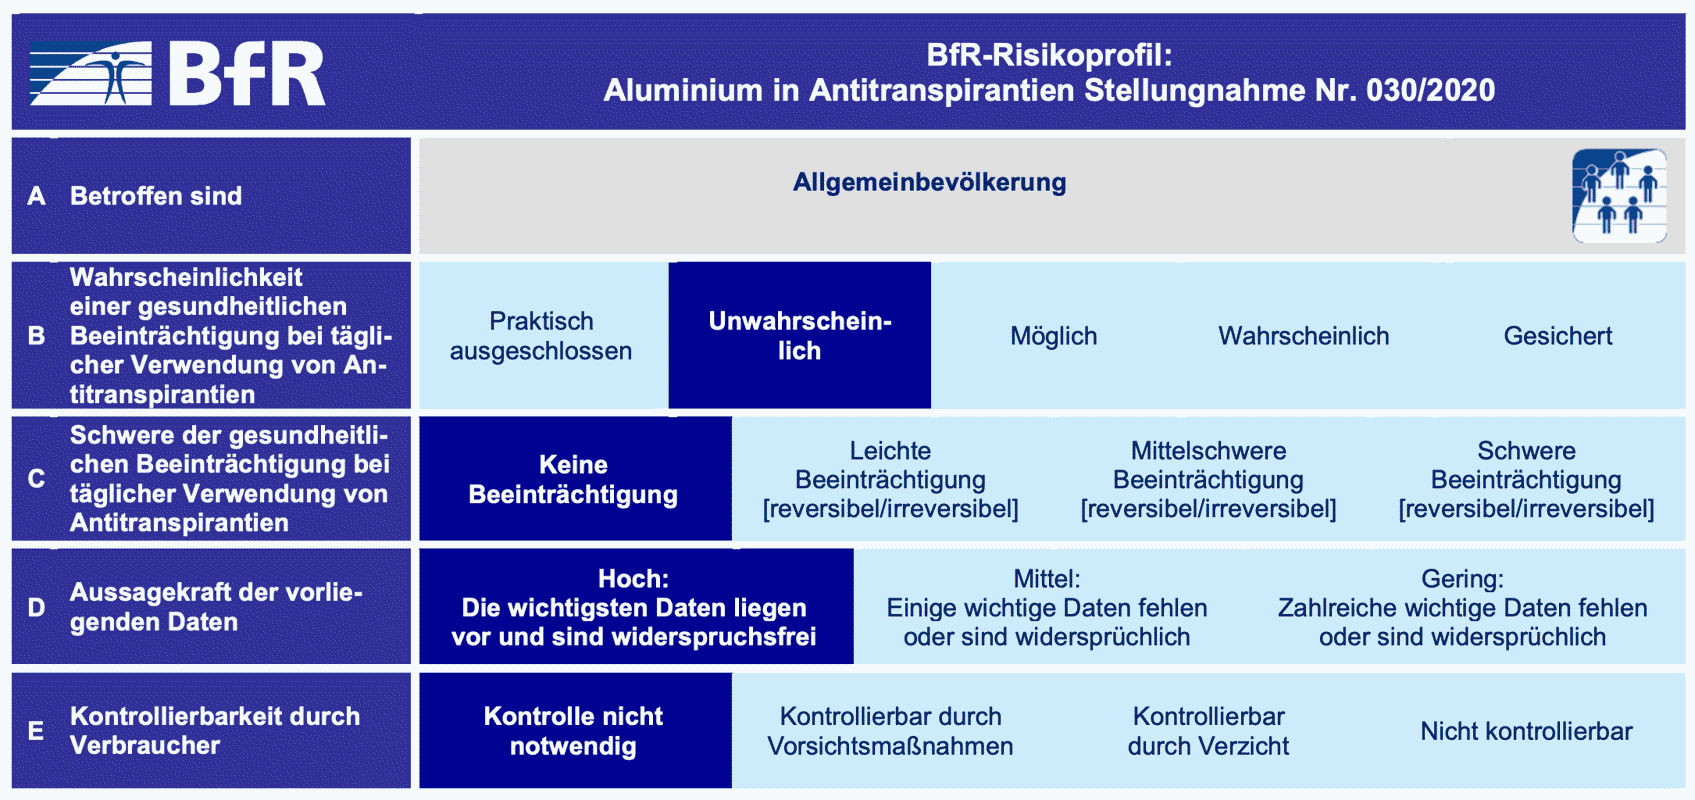 226301_2_2020-07-20 BfR - Gesamtbewertung - Aluminiumhaltige Antitranspirantien.png